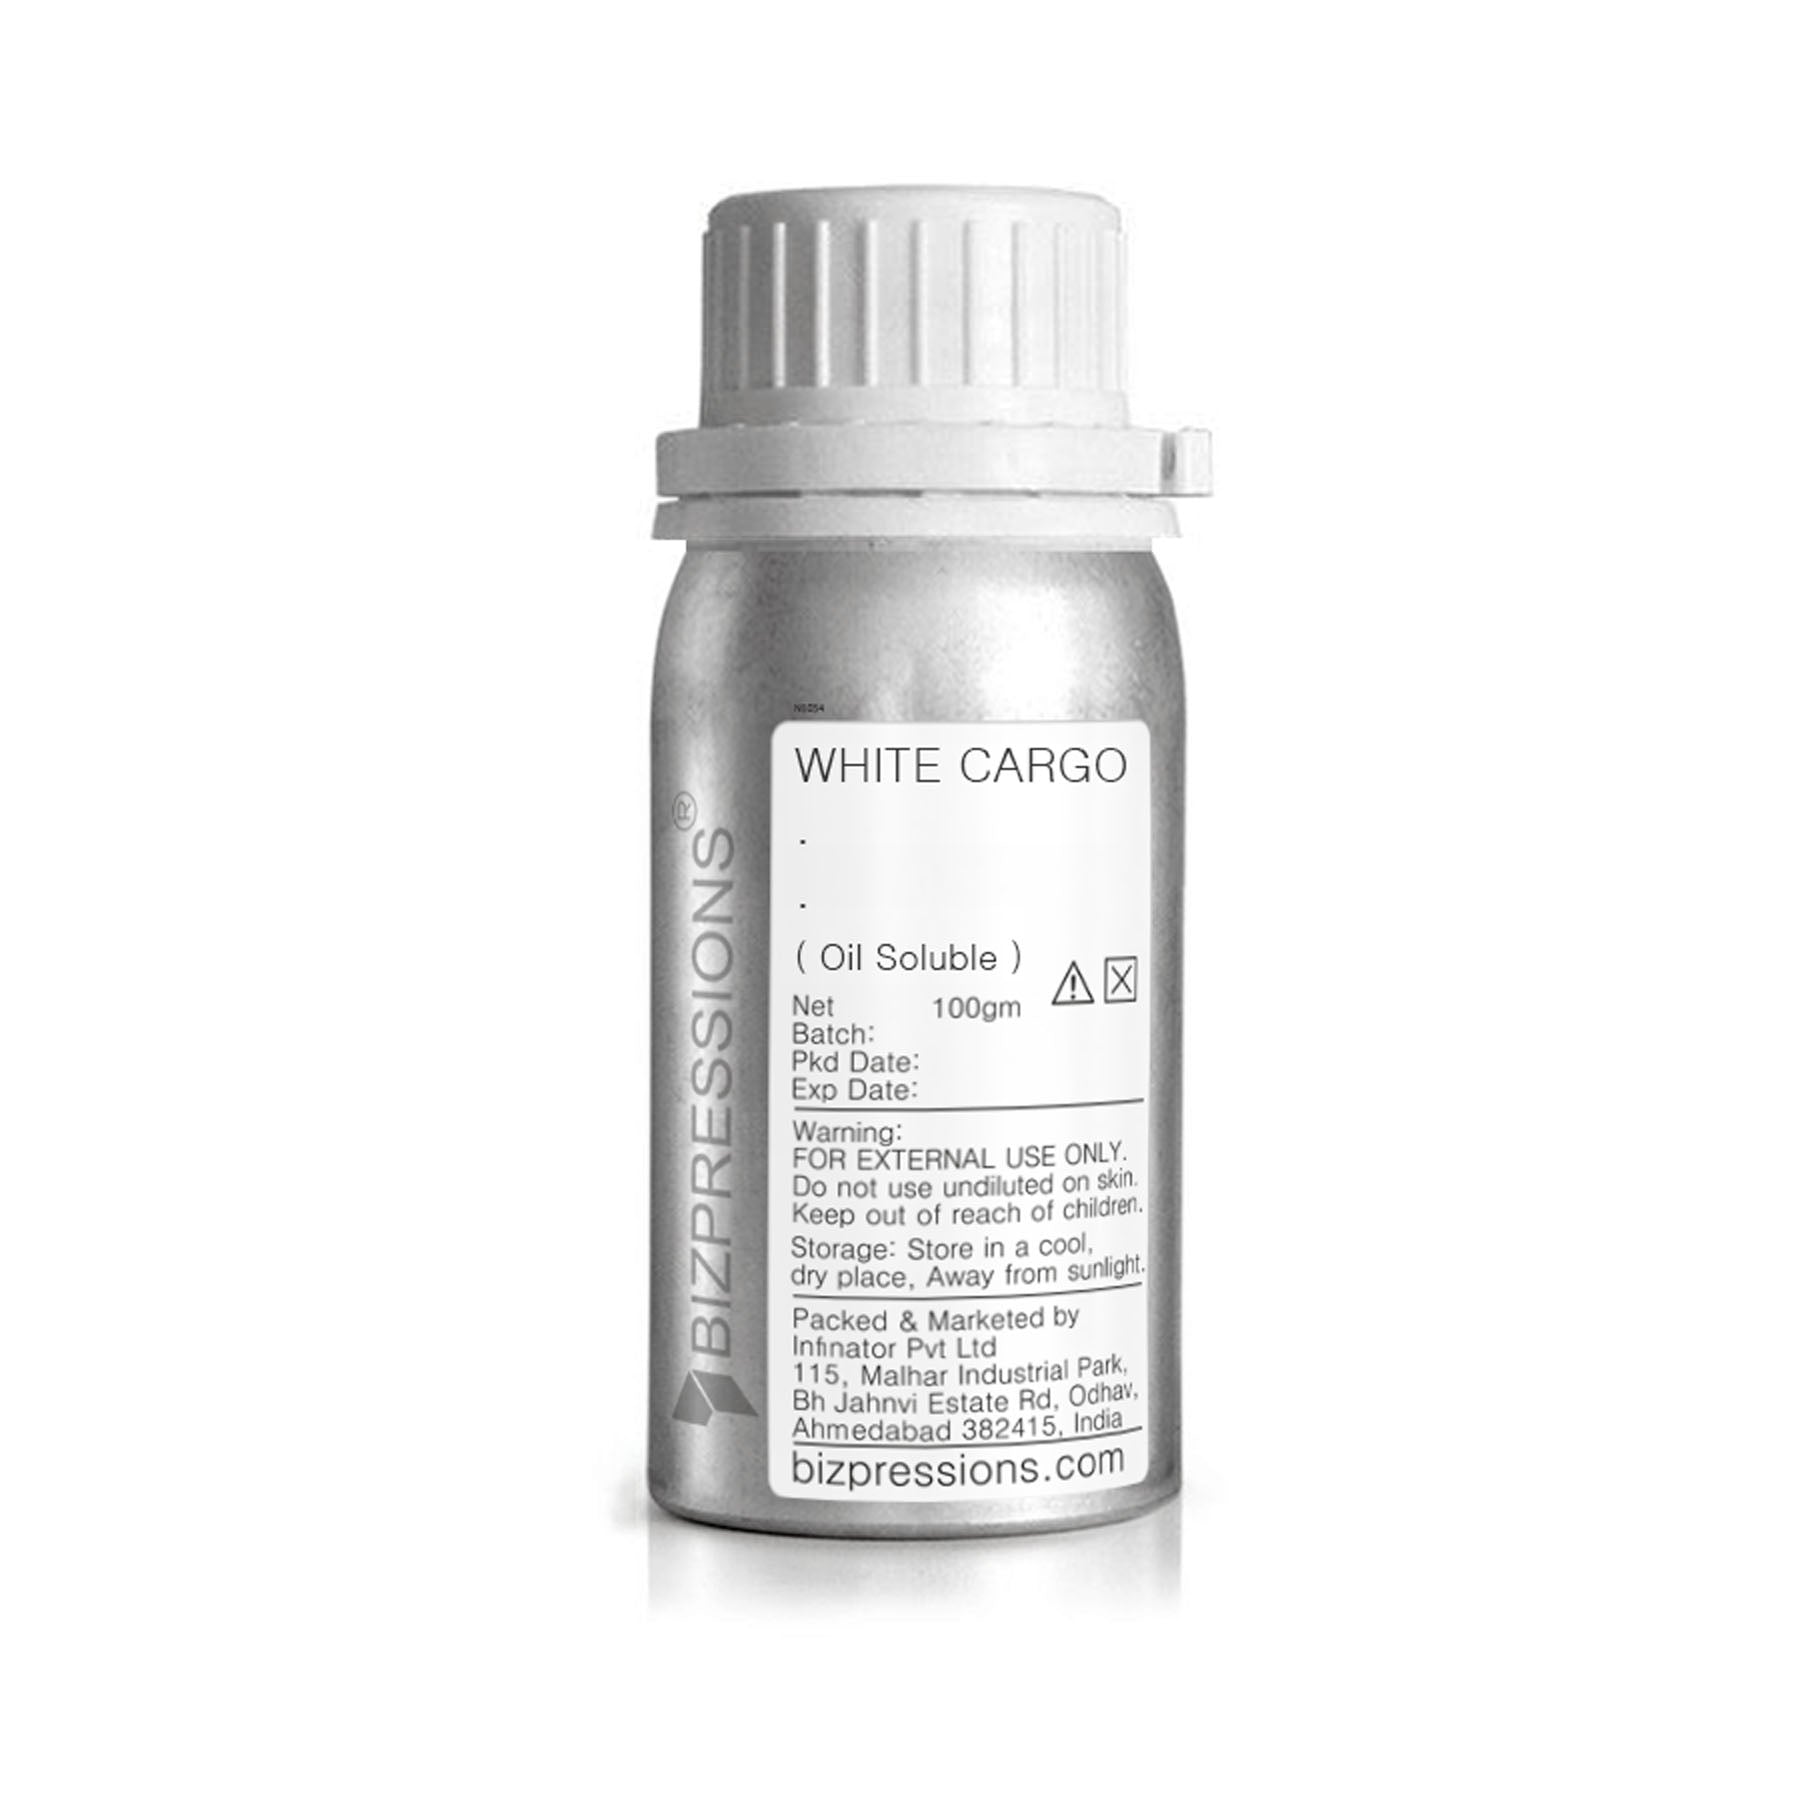 WHITE CARGO - Fragrance ( Oil Soluble ) - 100 gm